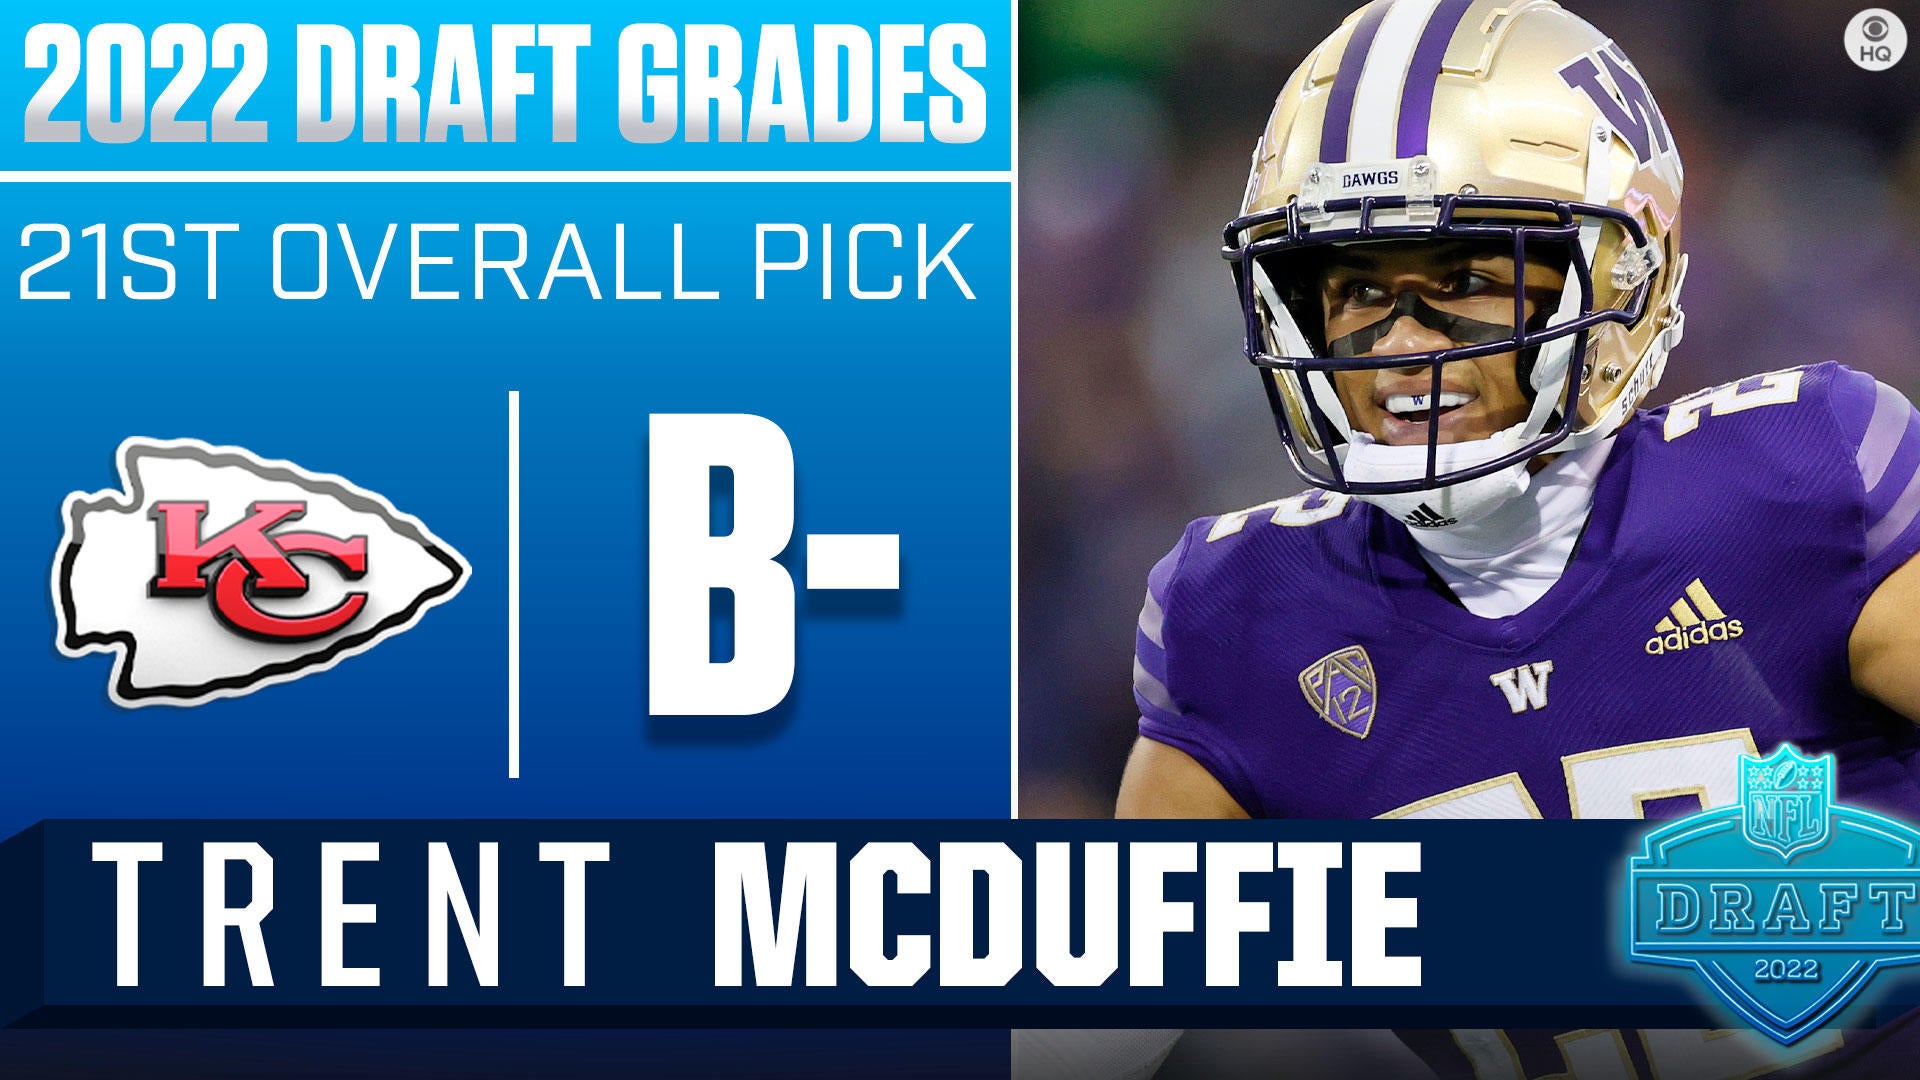 2022 NFL mock draft: Minnesota Vikings select Trent McDuffie